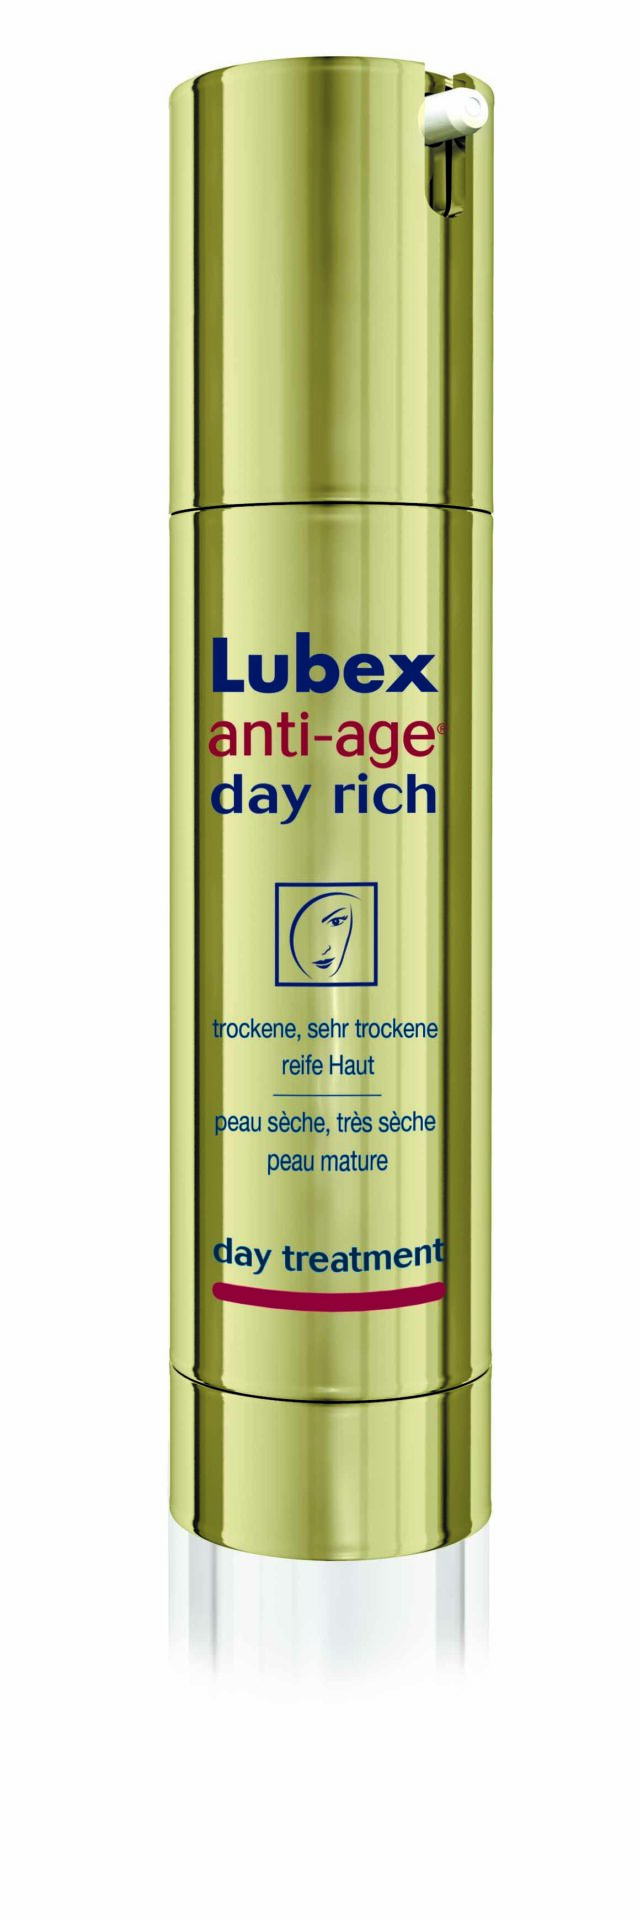 Lubex anti-age day rich (50 ml)